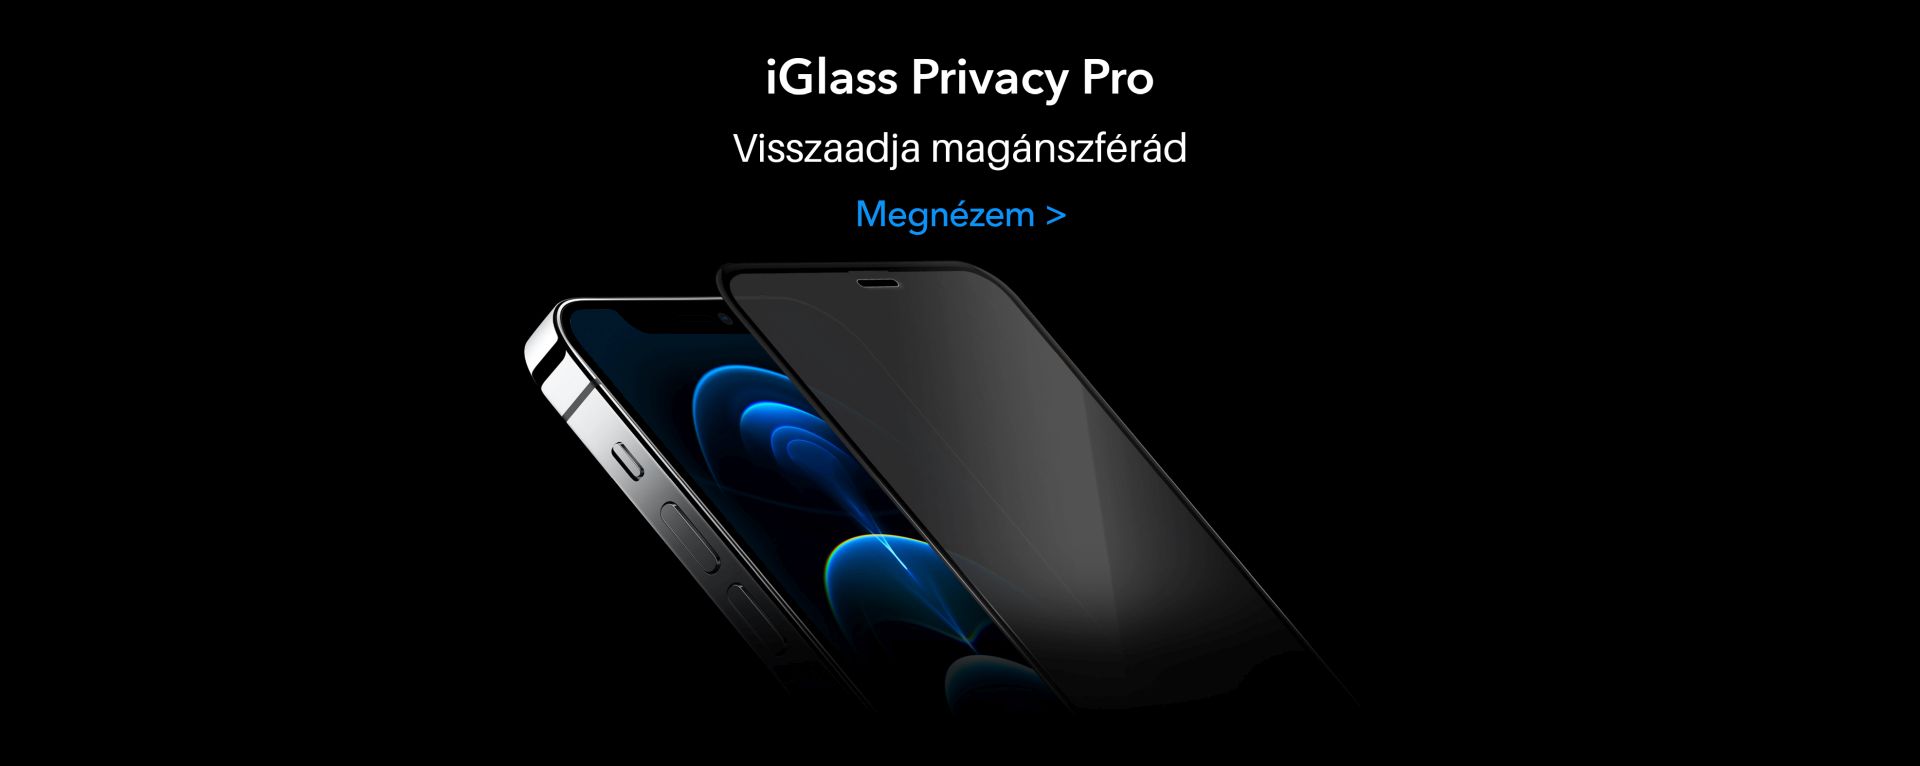 desktop privacy pro-iglass-iphone-uvegfolia